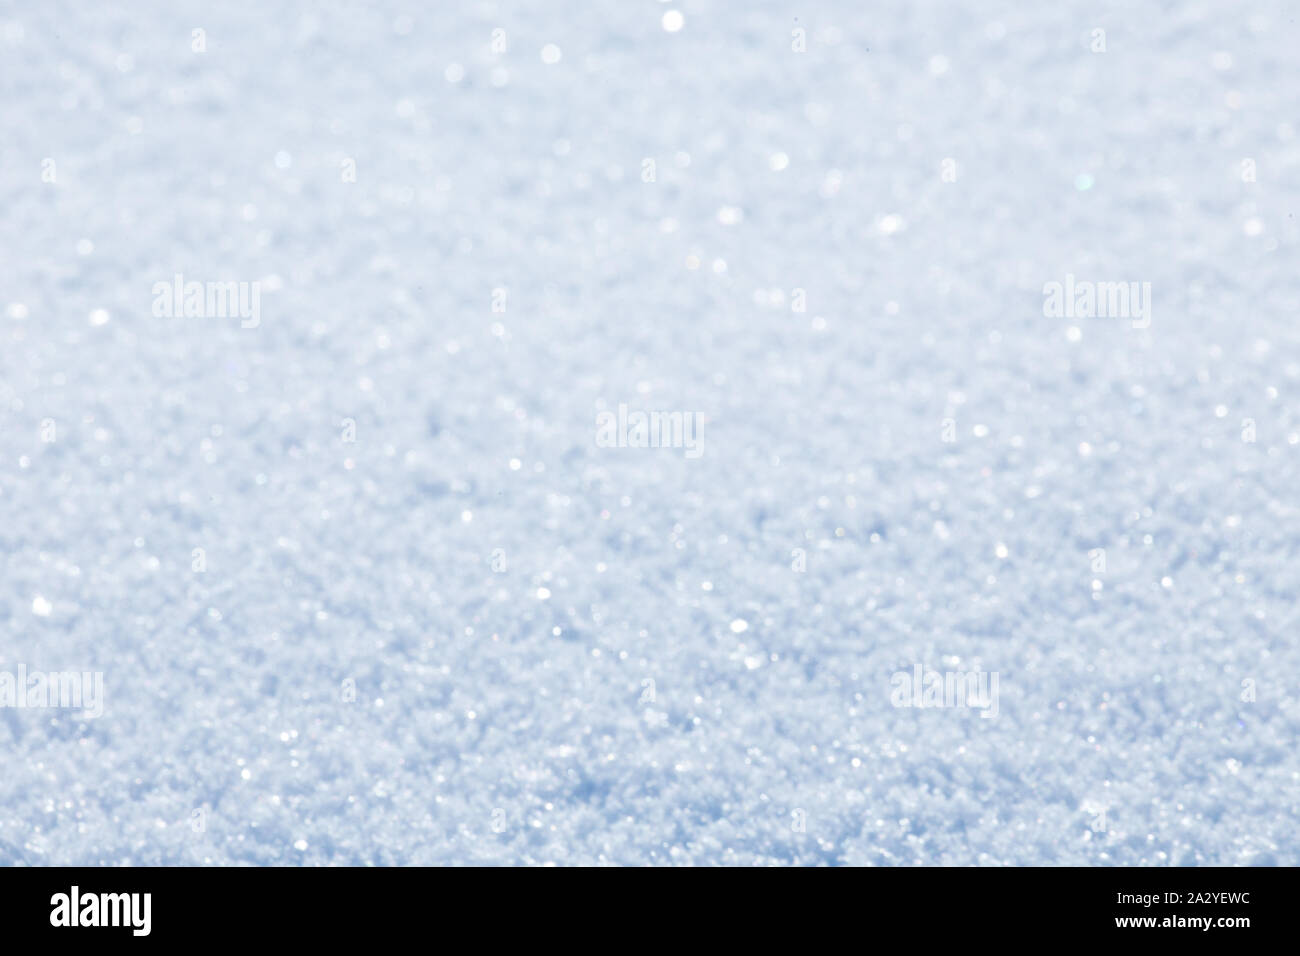 Beautiful snowy background. Winter snow. Christmas winter background with snow and blurred bokeh Stock Photo